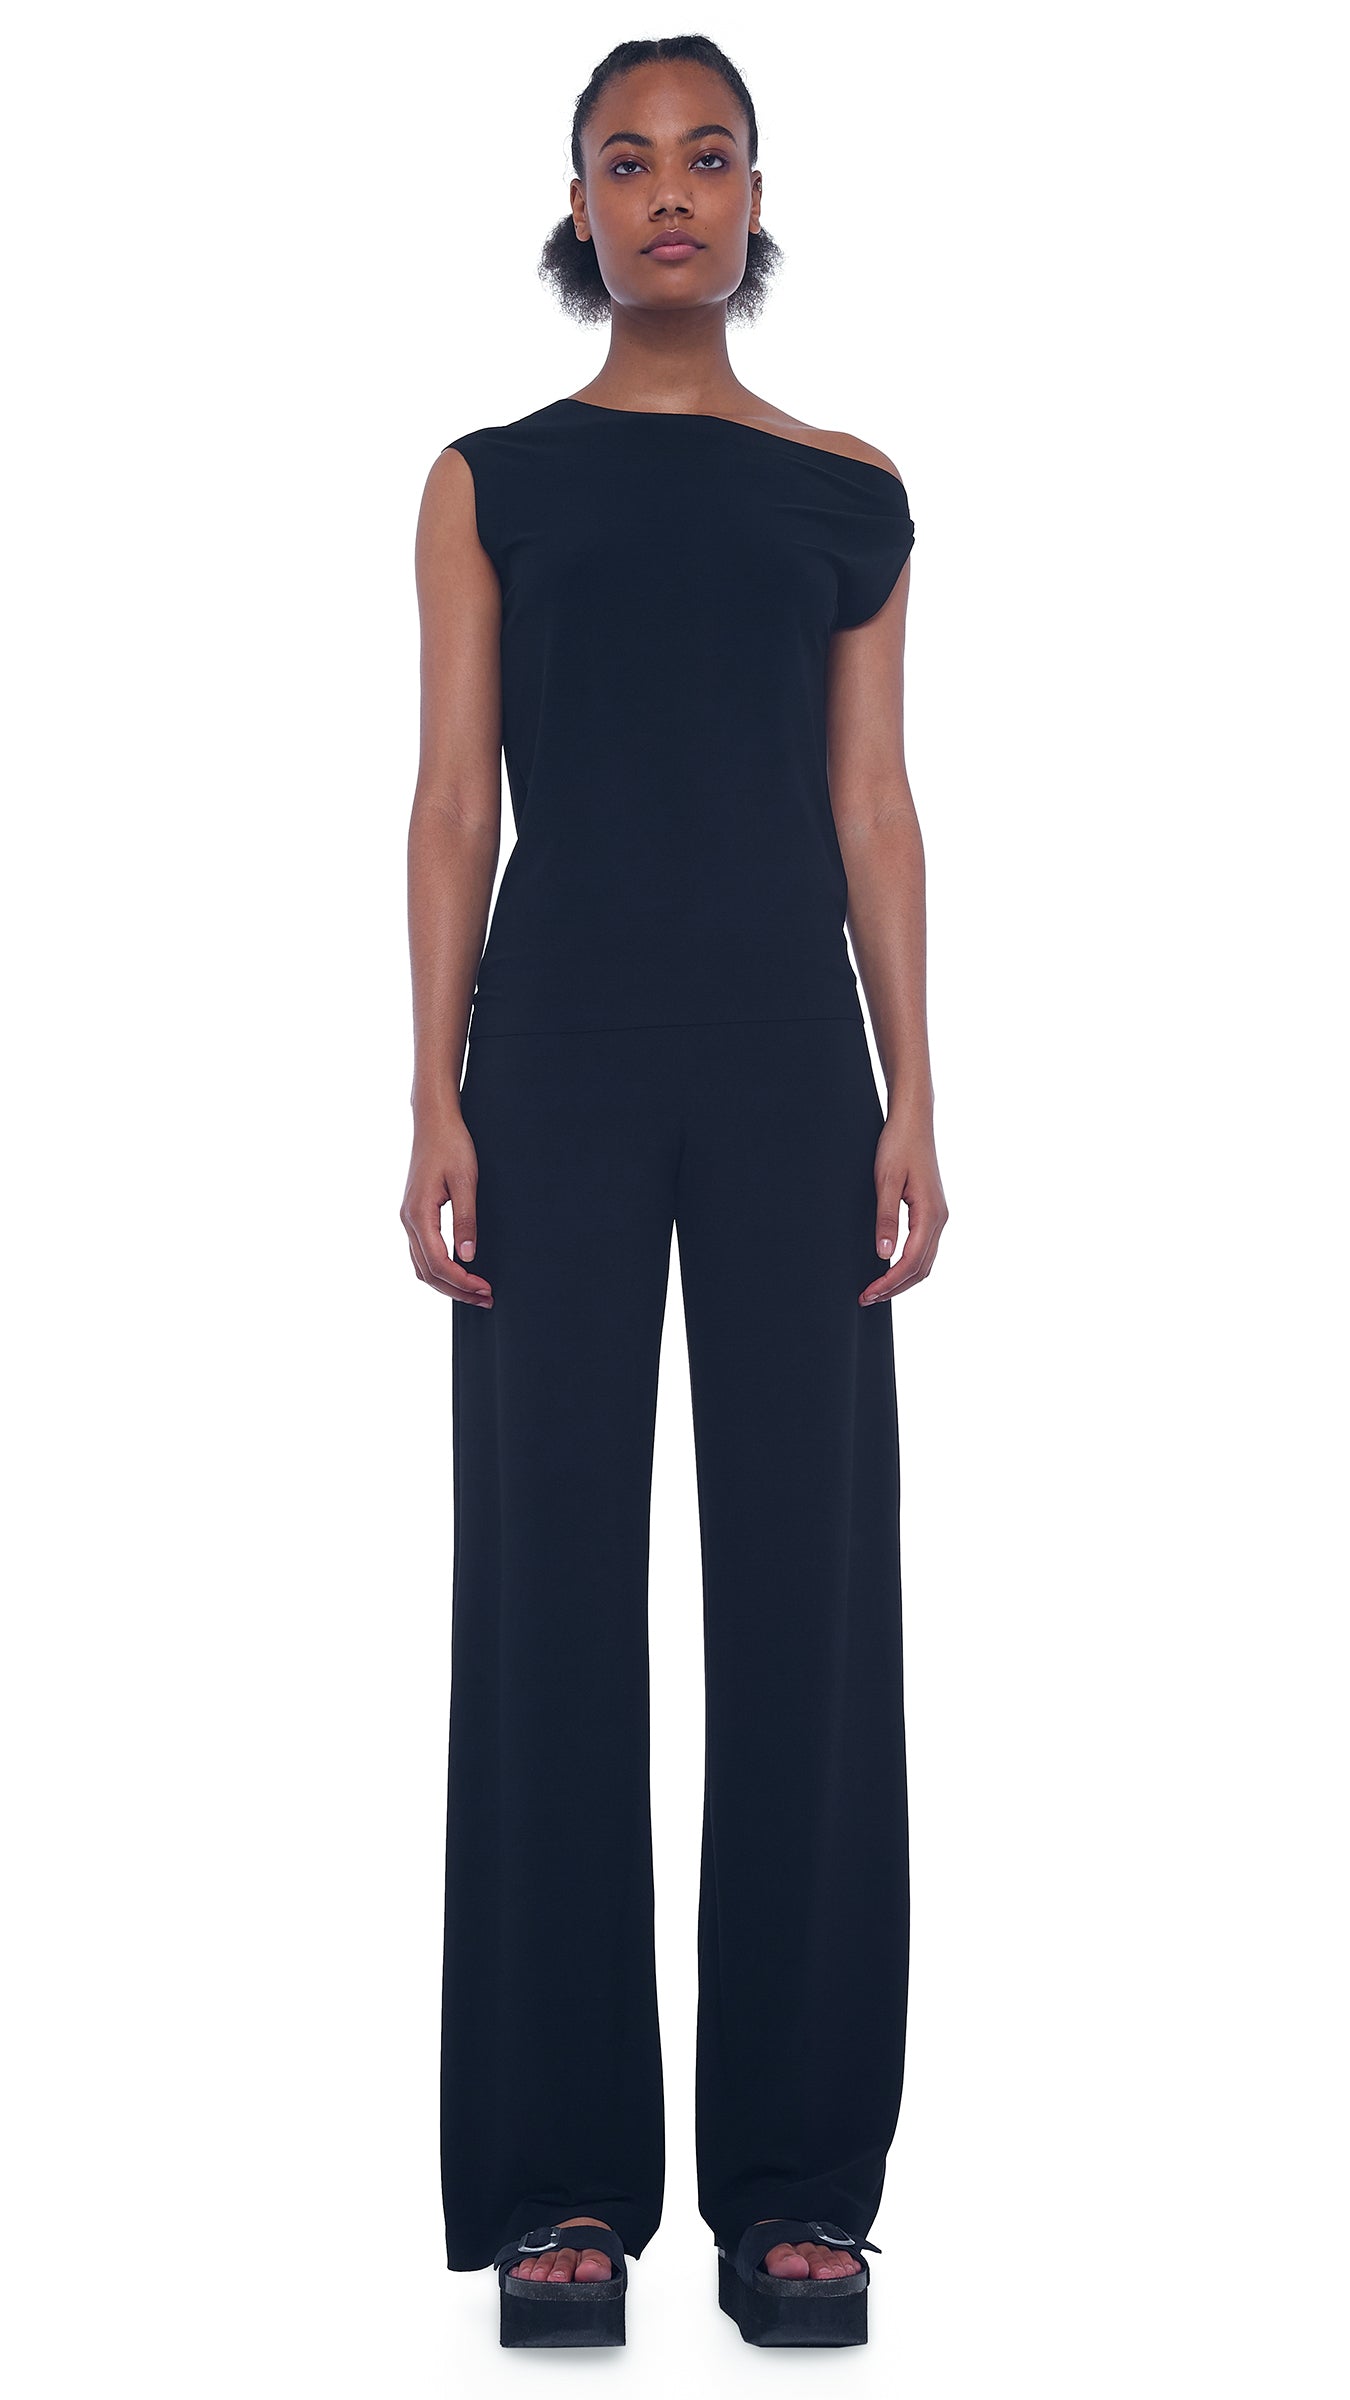 Buy Buynewtrend Lycra Full Length Front Slit Women Trouser Pant (28, Black)  at Amazon.in